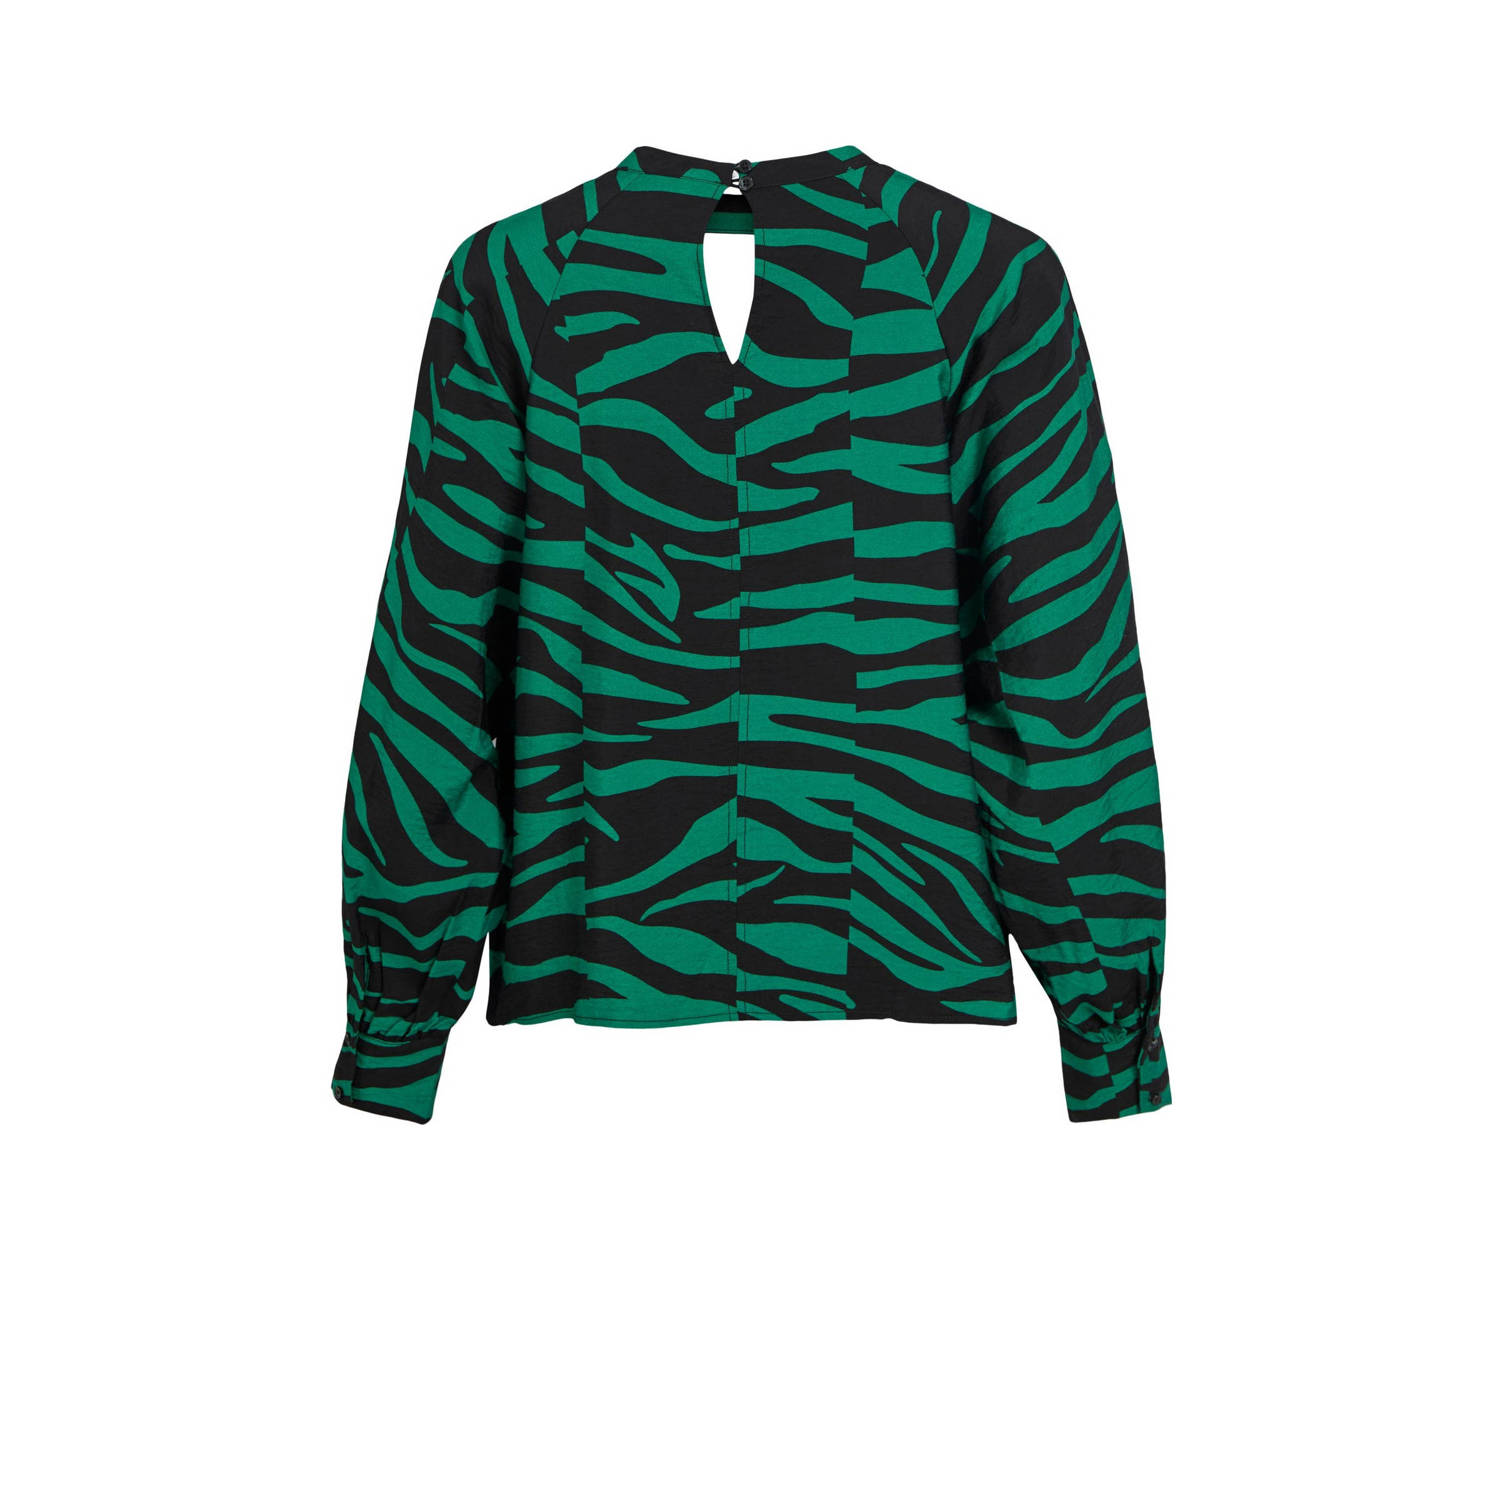 OBJECT Curve blousetop met zebraprint groen zwart